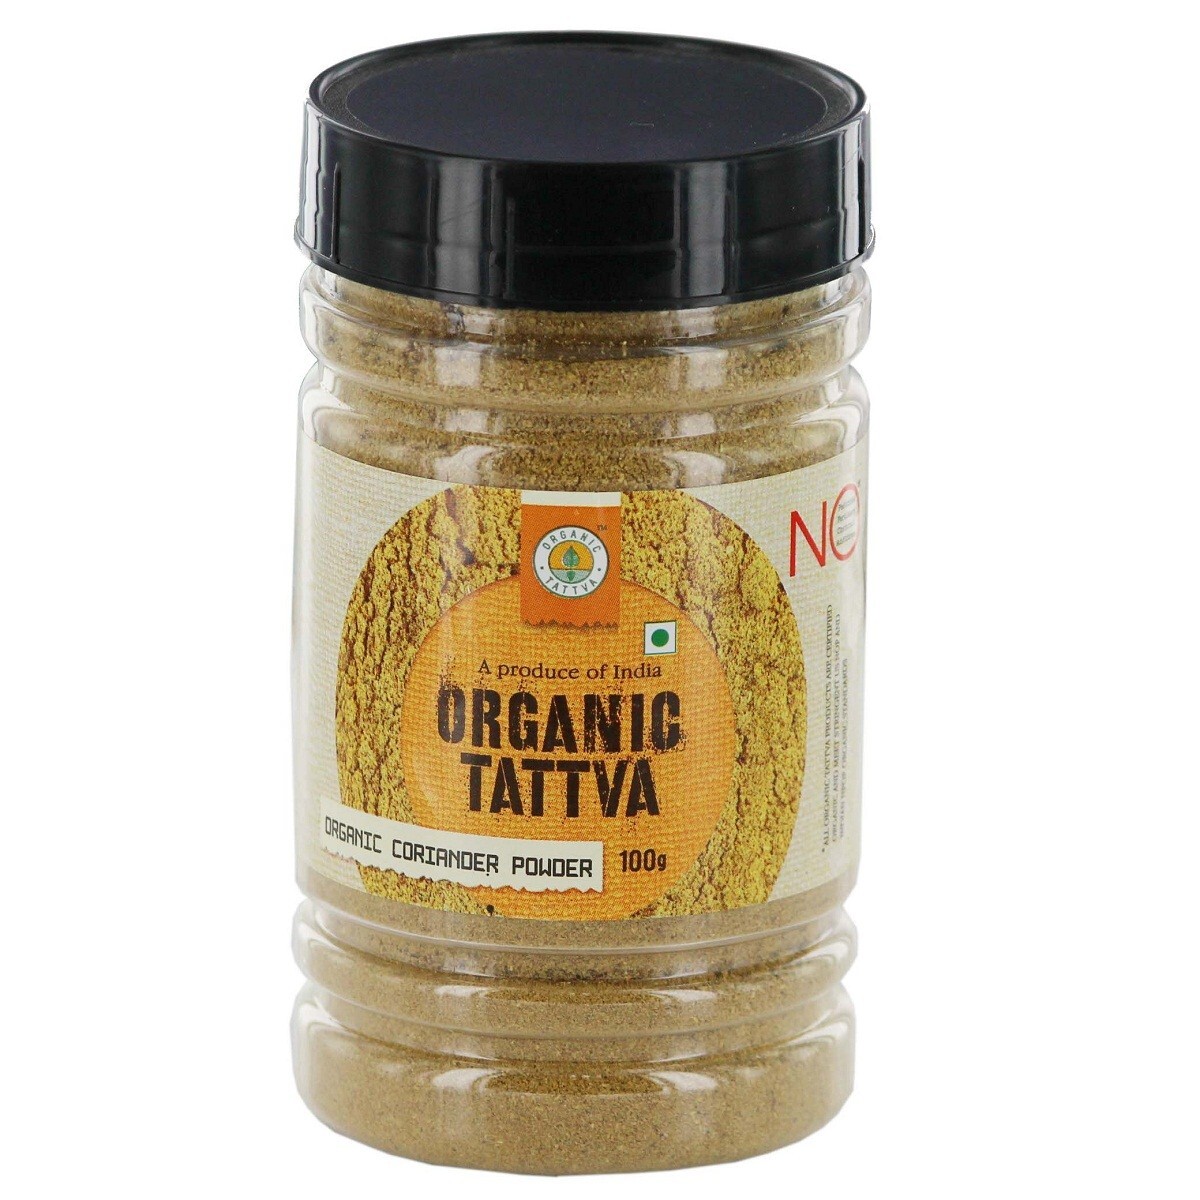 Organic Tattva Organic Coriander Powder 100g